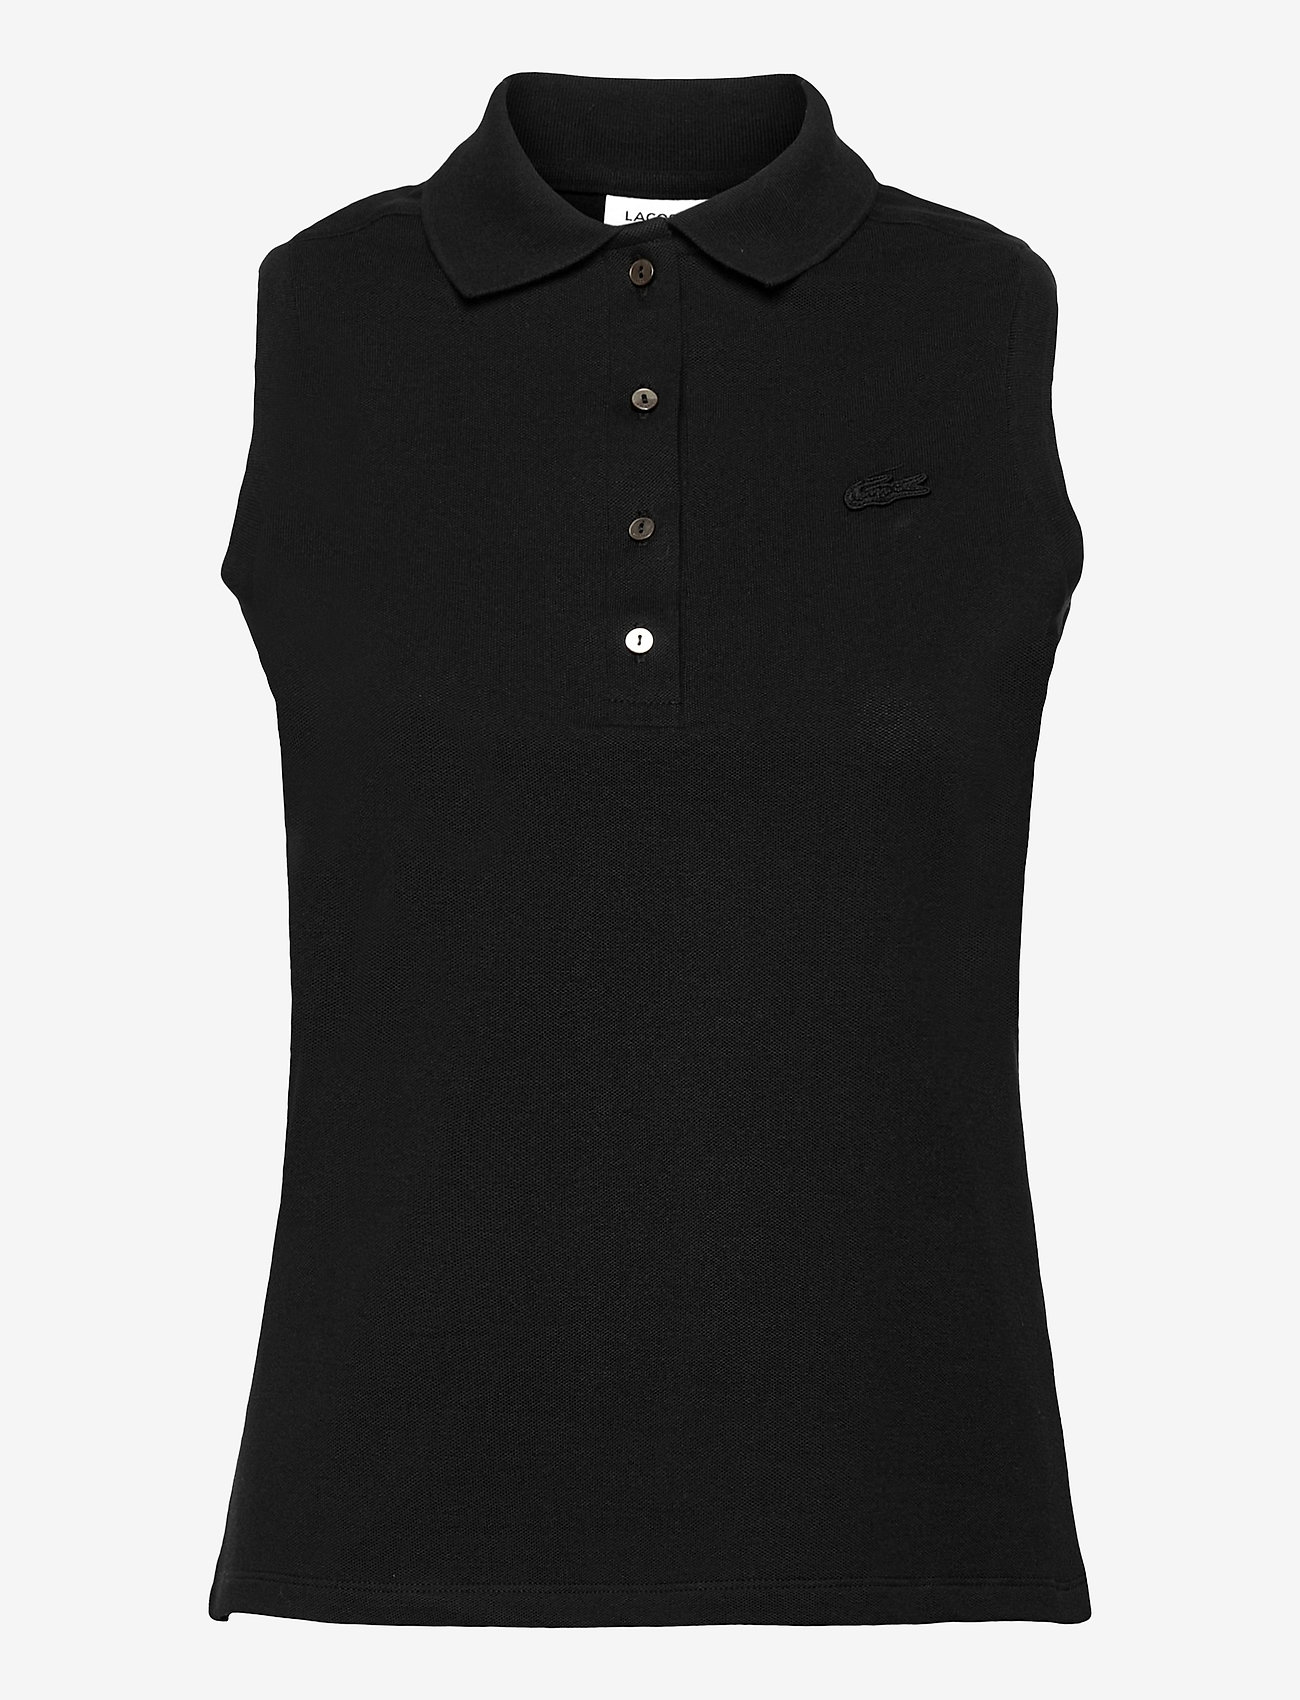 Lacoste - Women s S/S polo - sleeveless tops - black - 0